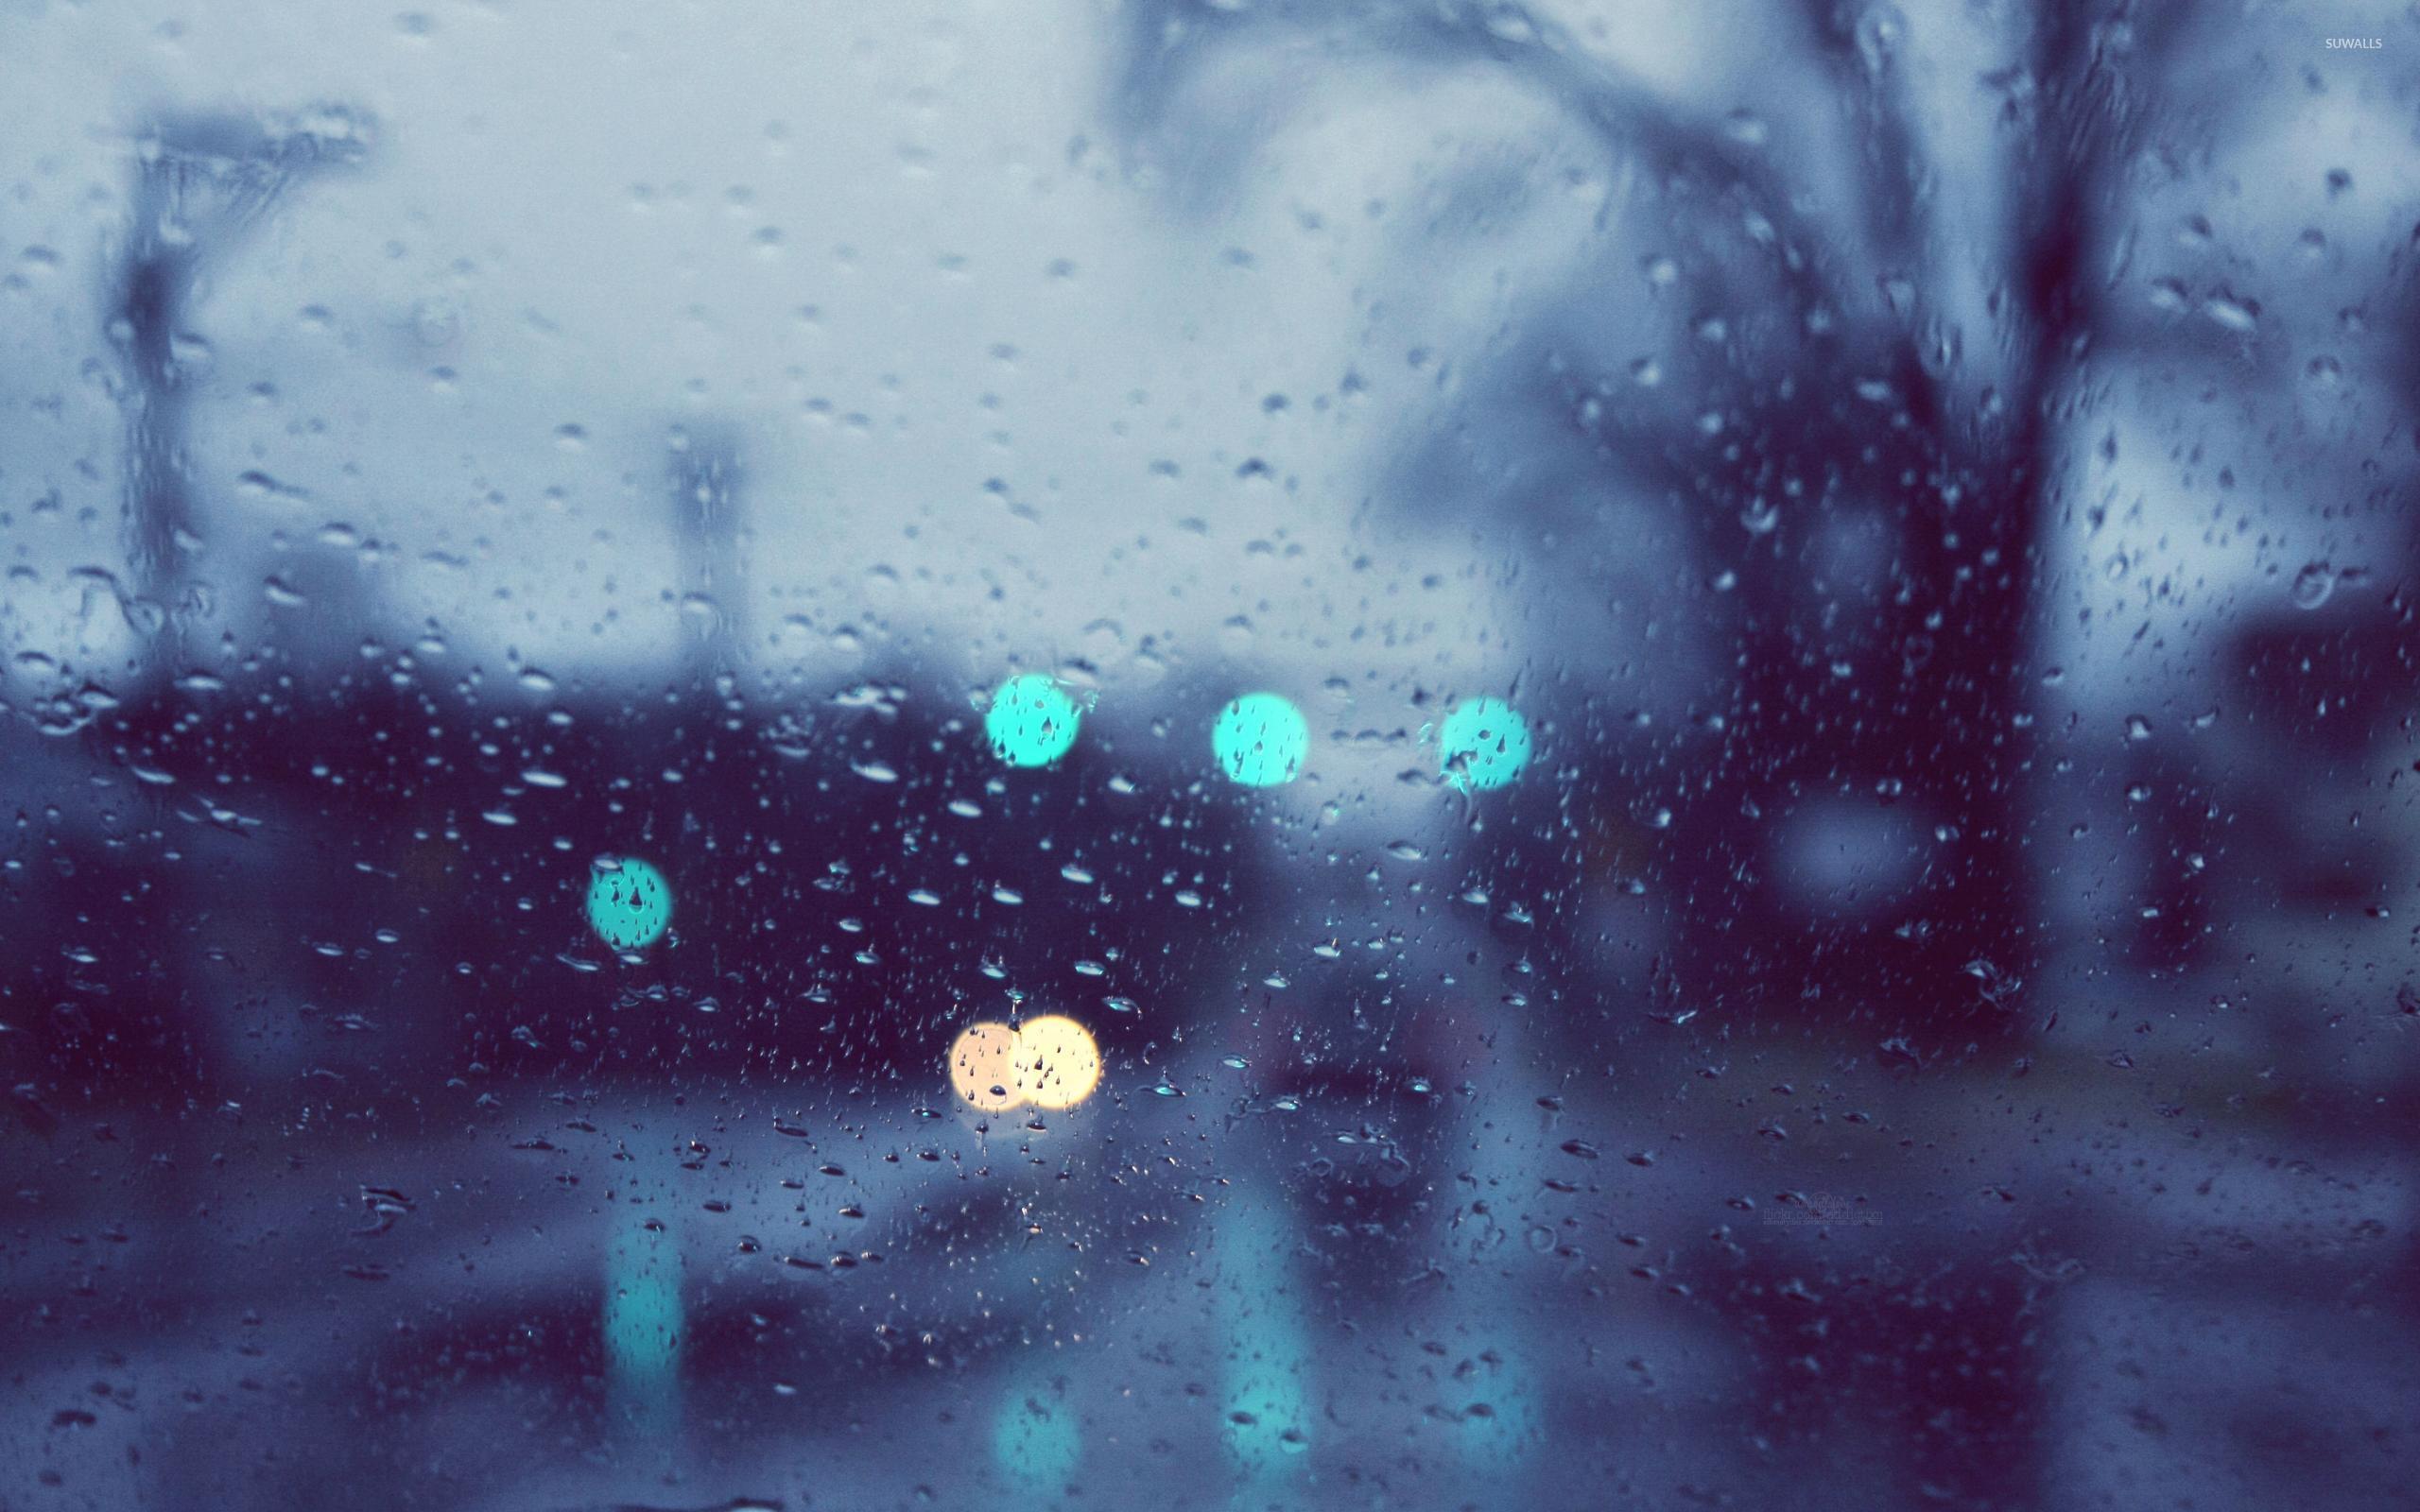 Rainy window wallpaper - Photography wallpapers - #21311